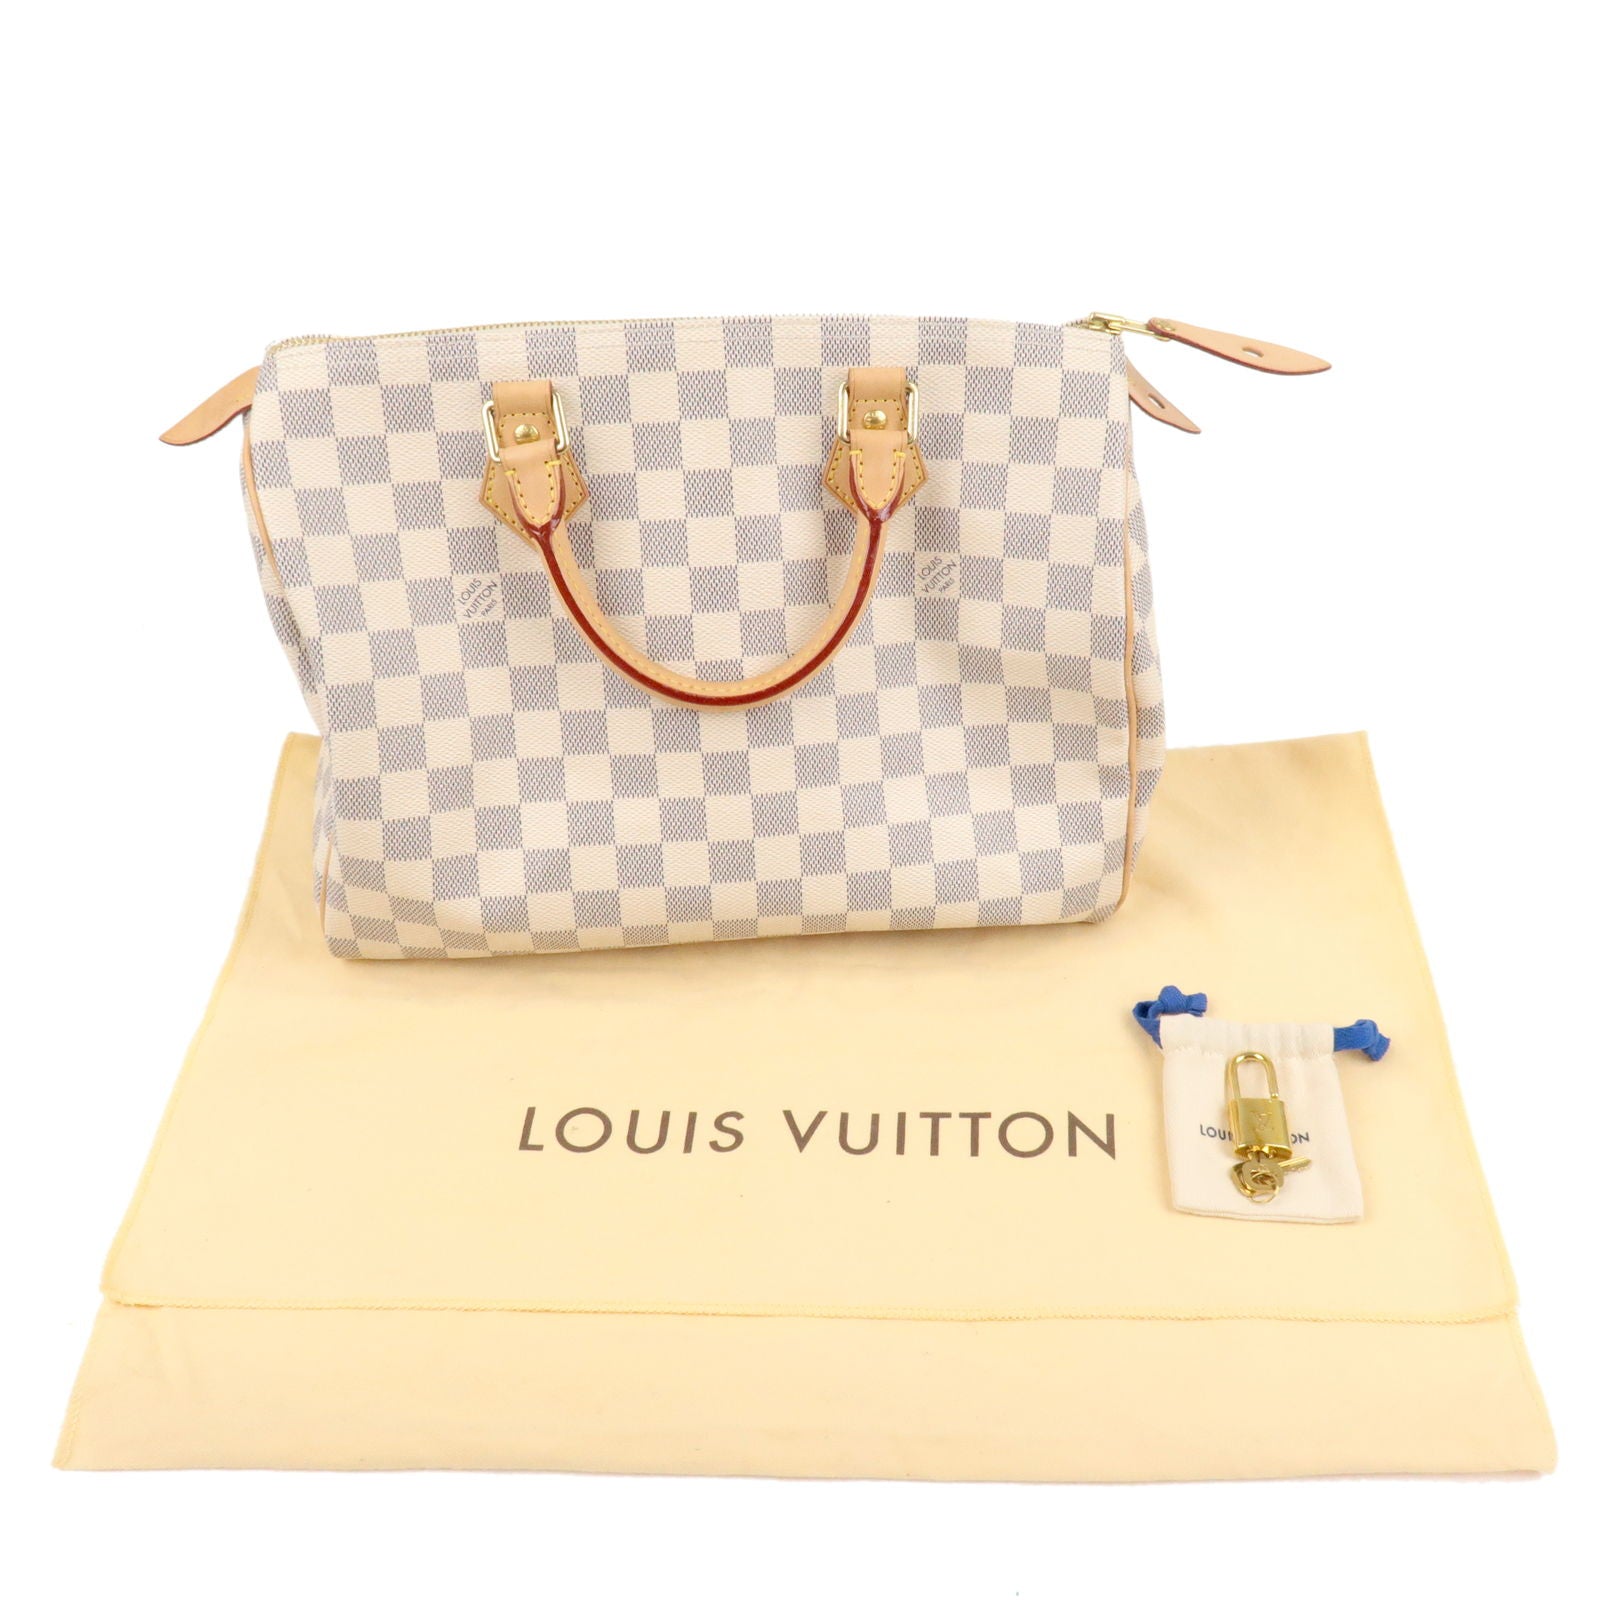 LOUIS VUITTON Hand Bag Speedy 30 Bandouliere Damier Azur Bag Added